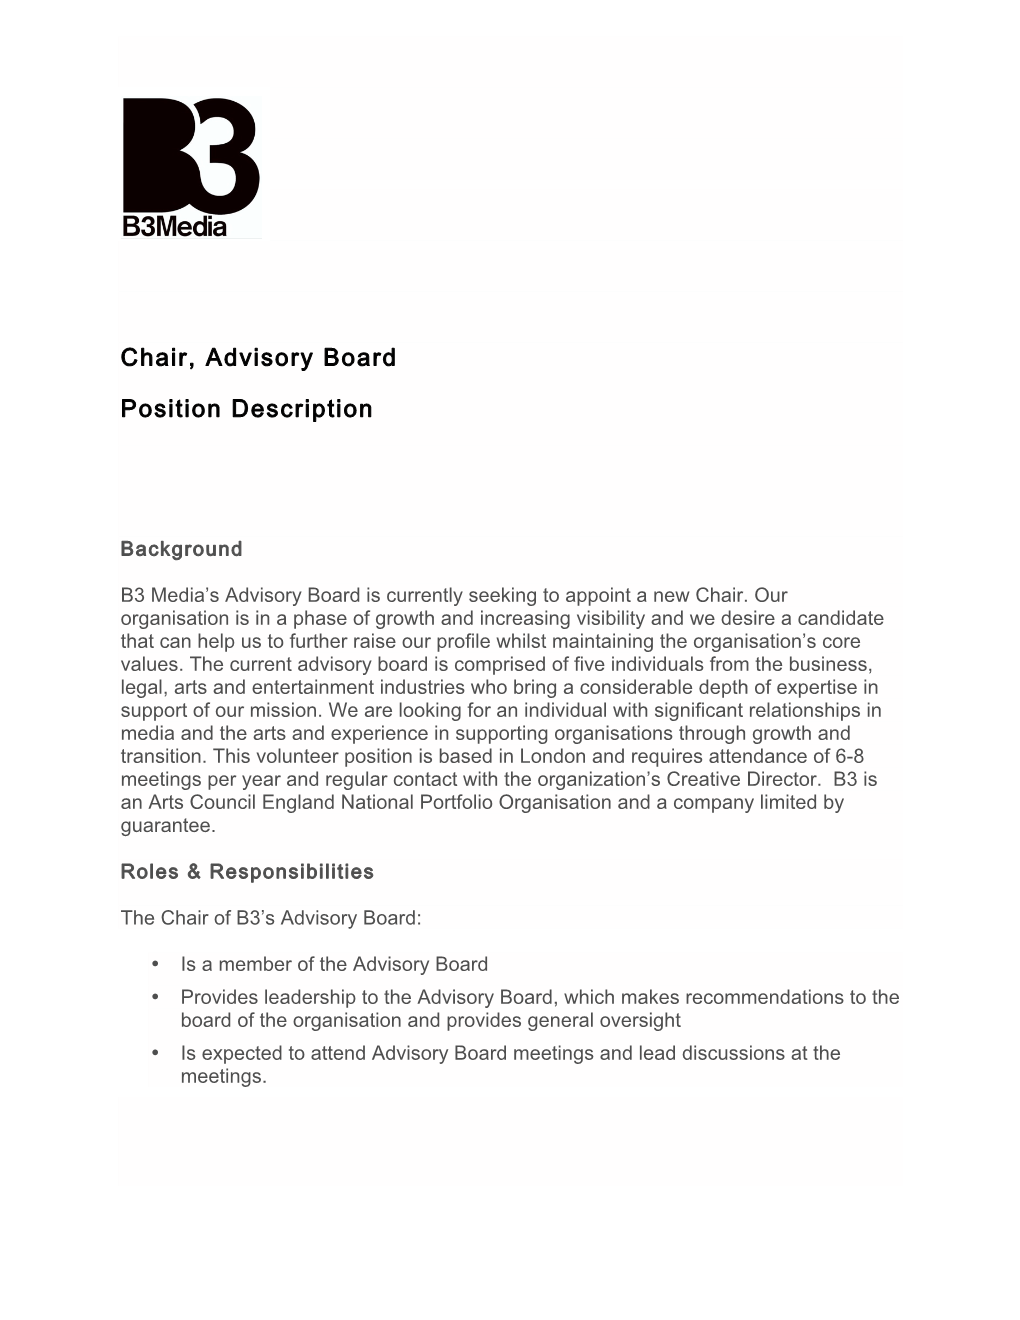 Chair, Advisory Board Position Description